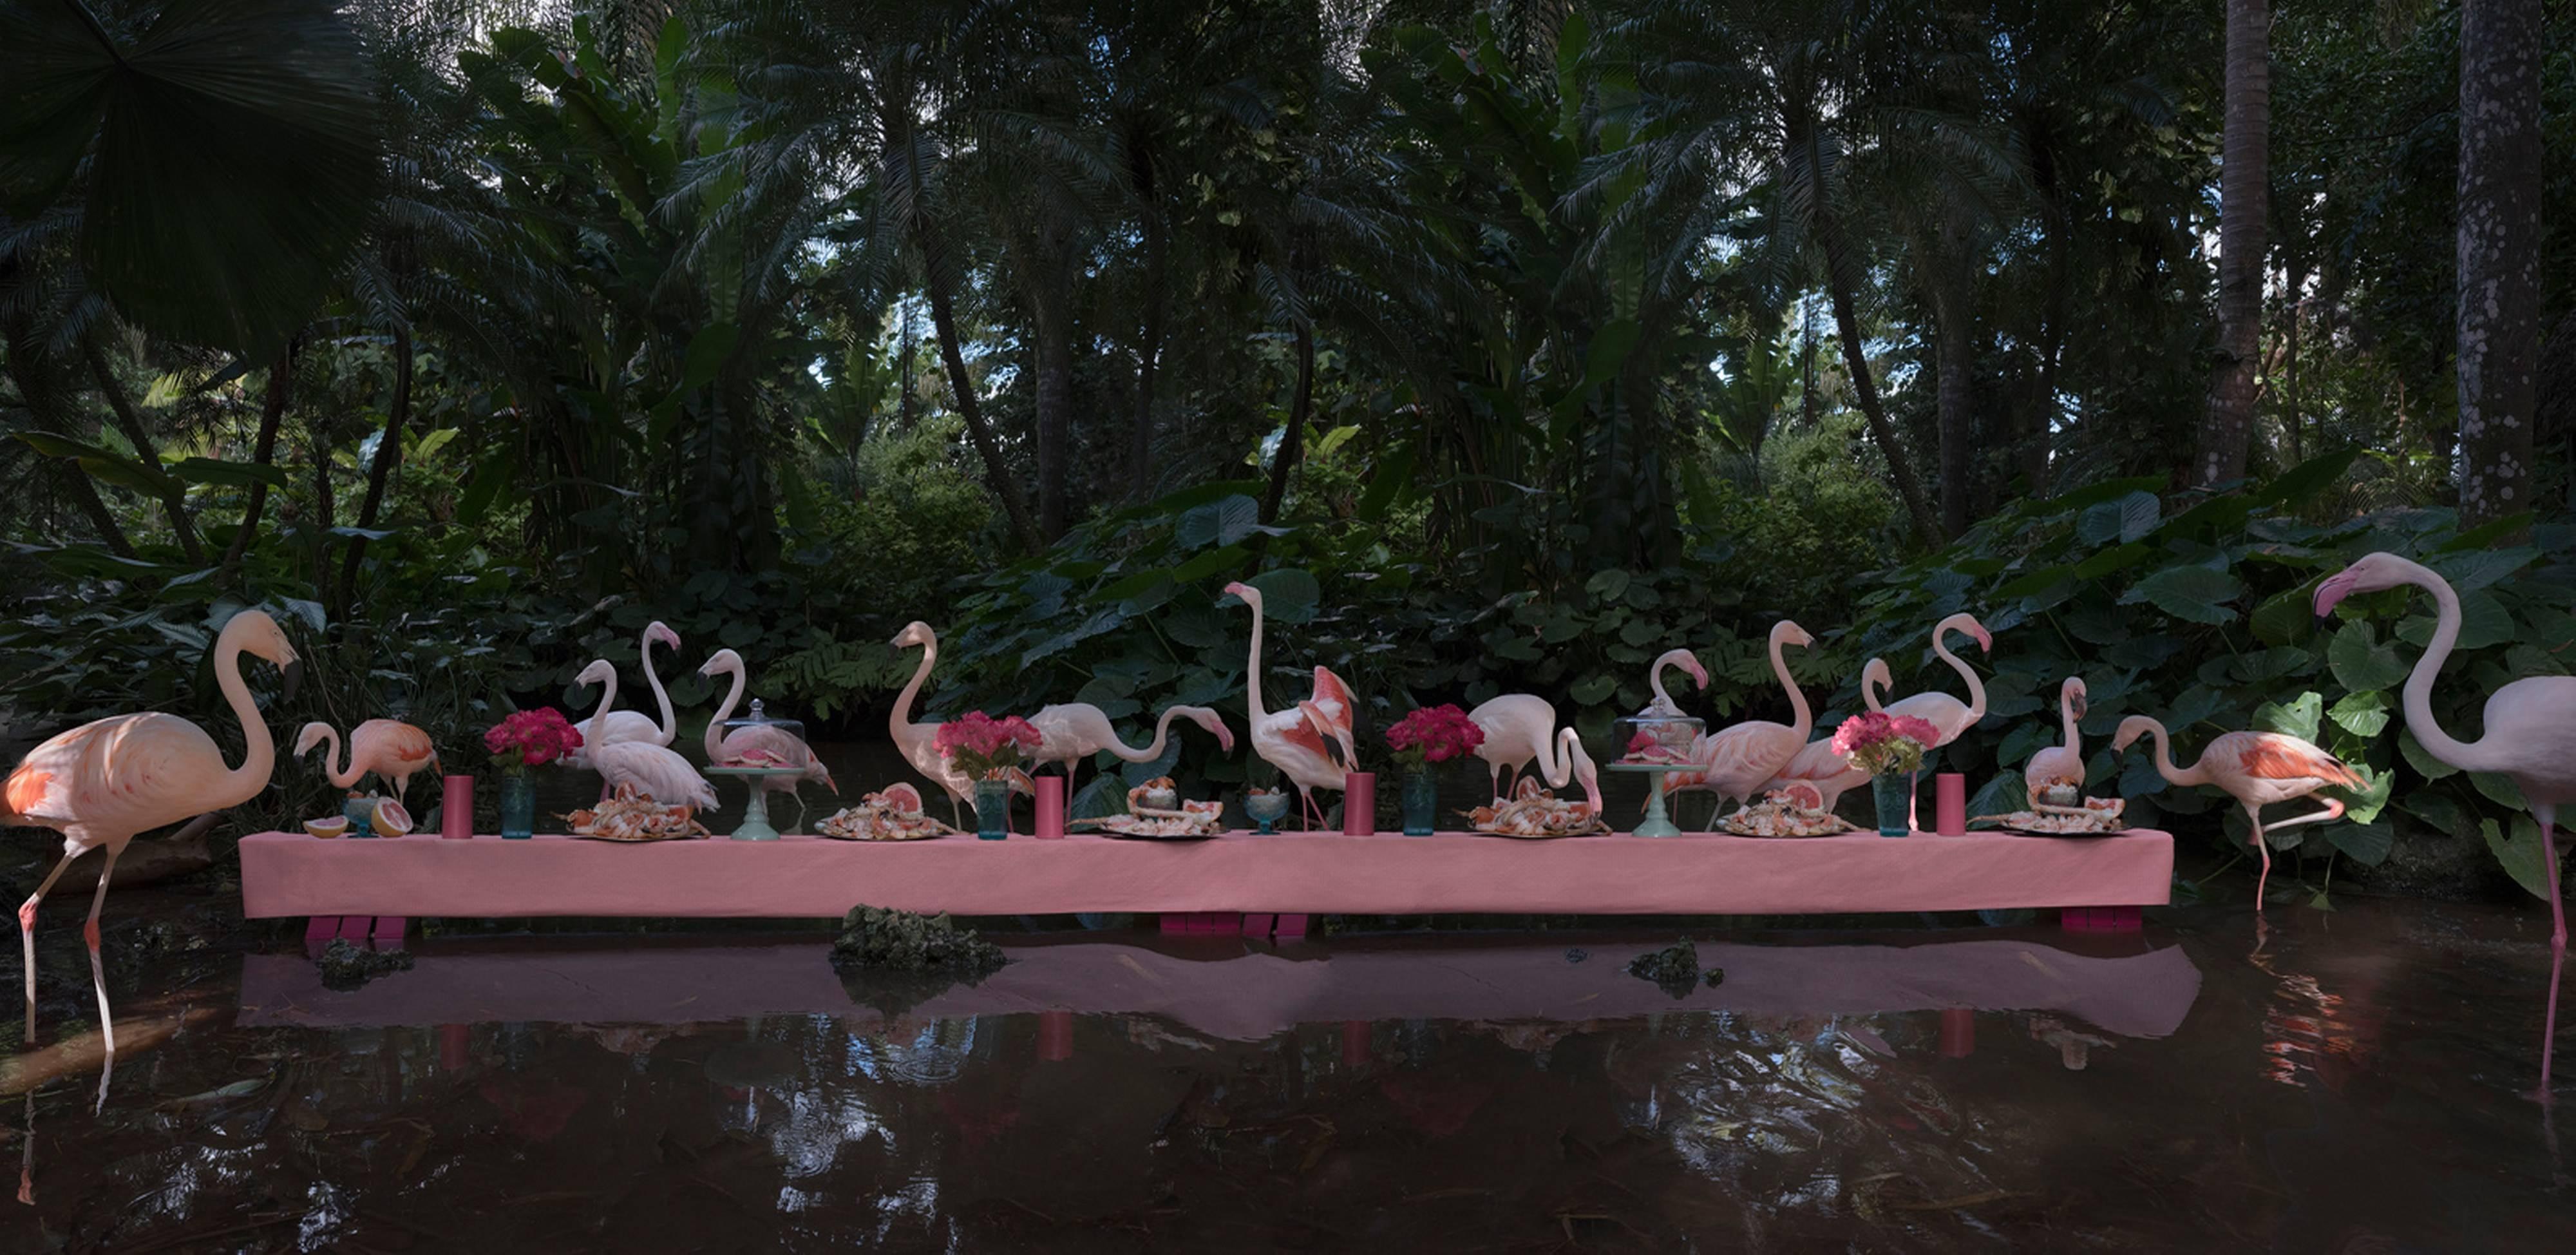 Claire Rosen Color Photograph - The Pink Flamingo Feast